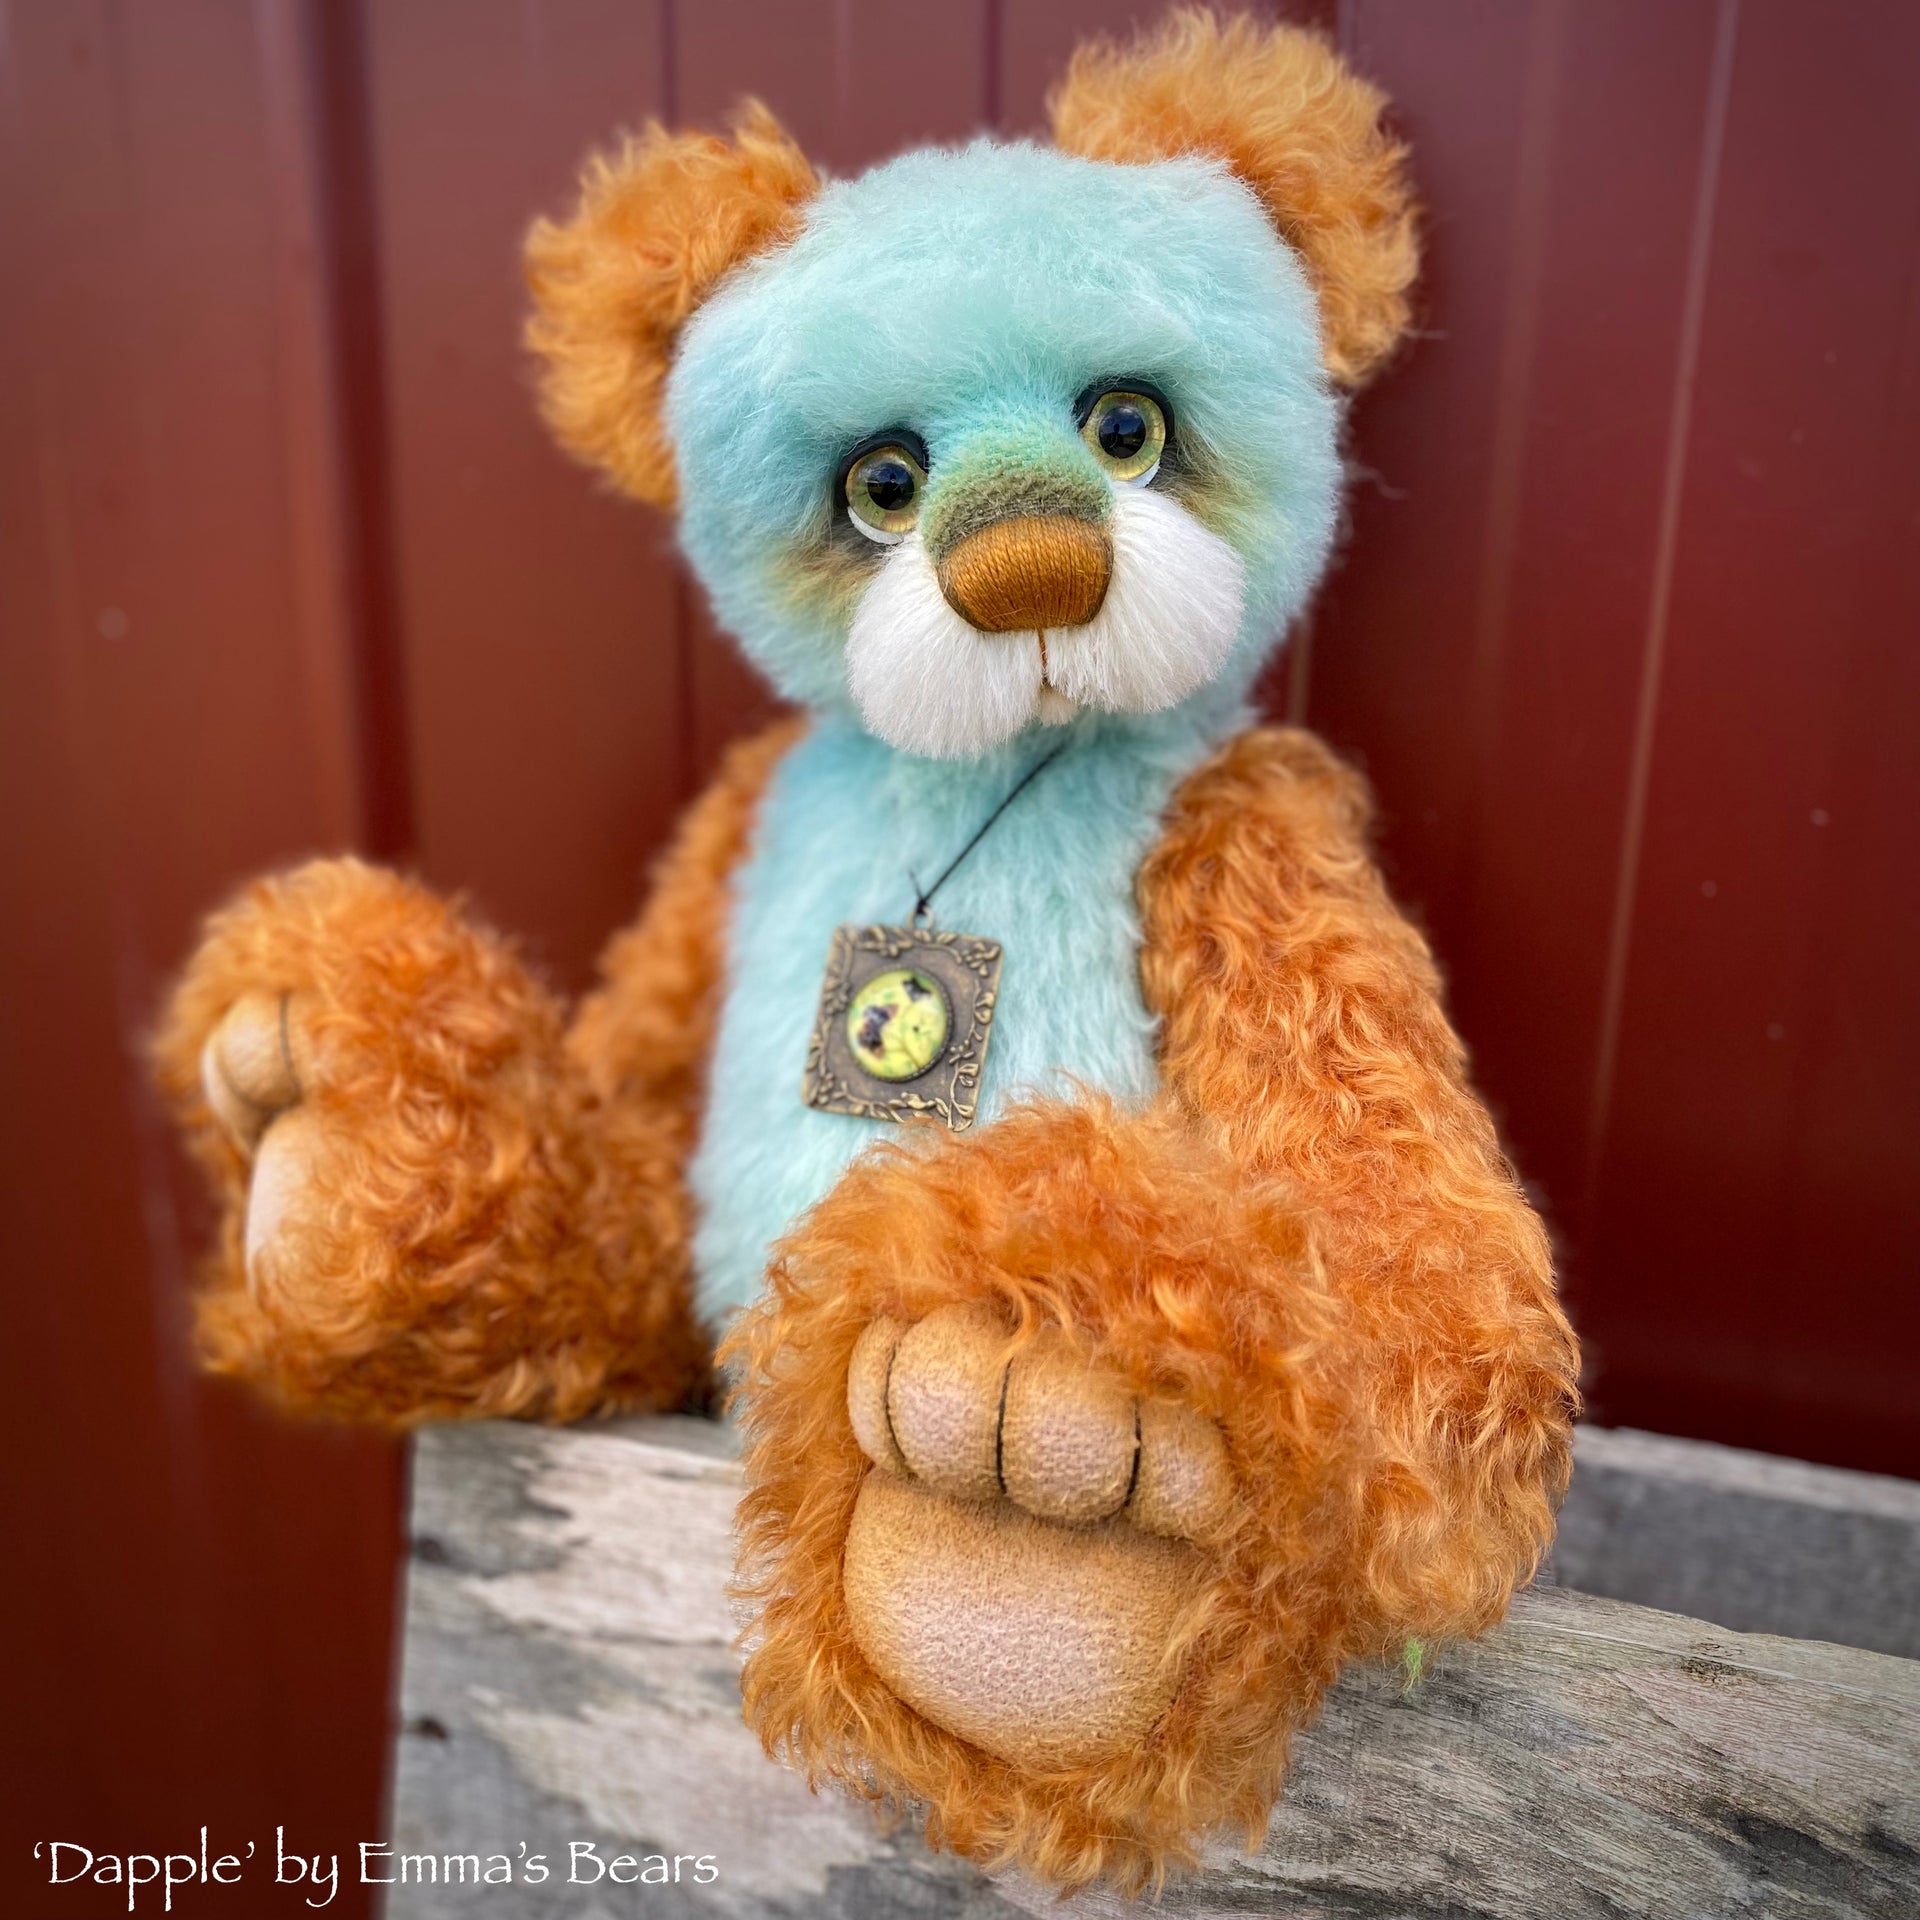 Dapple - 14" Hand-dyed alpaca and kid mohair artist bear by Emma's Bears - OOAK